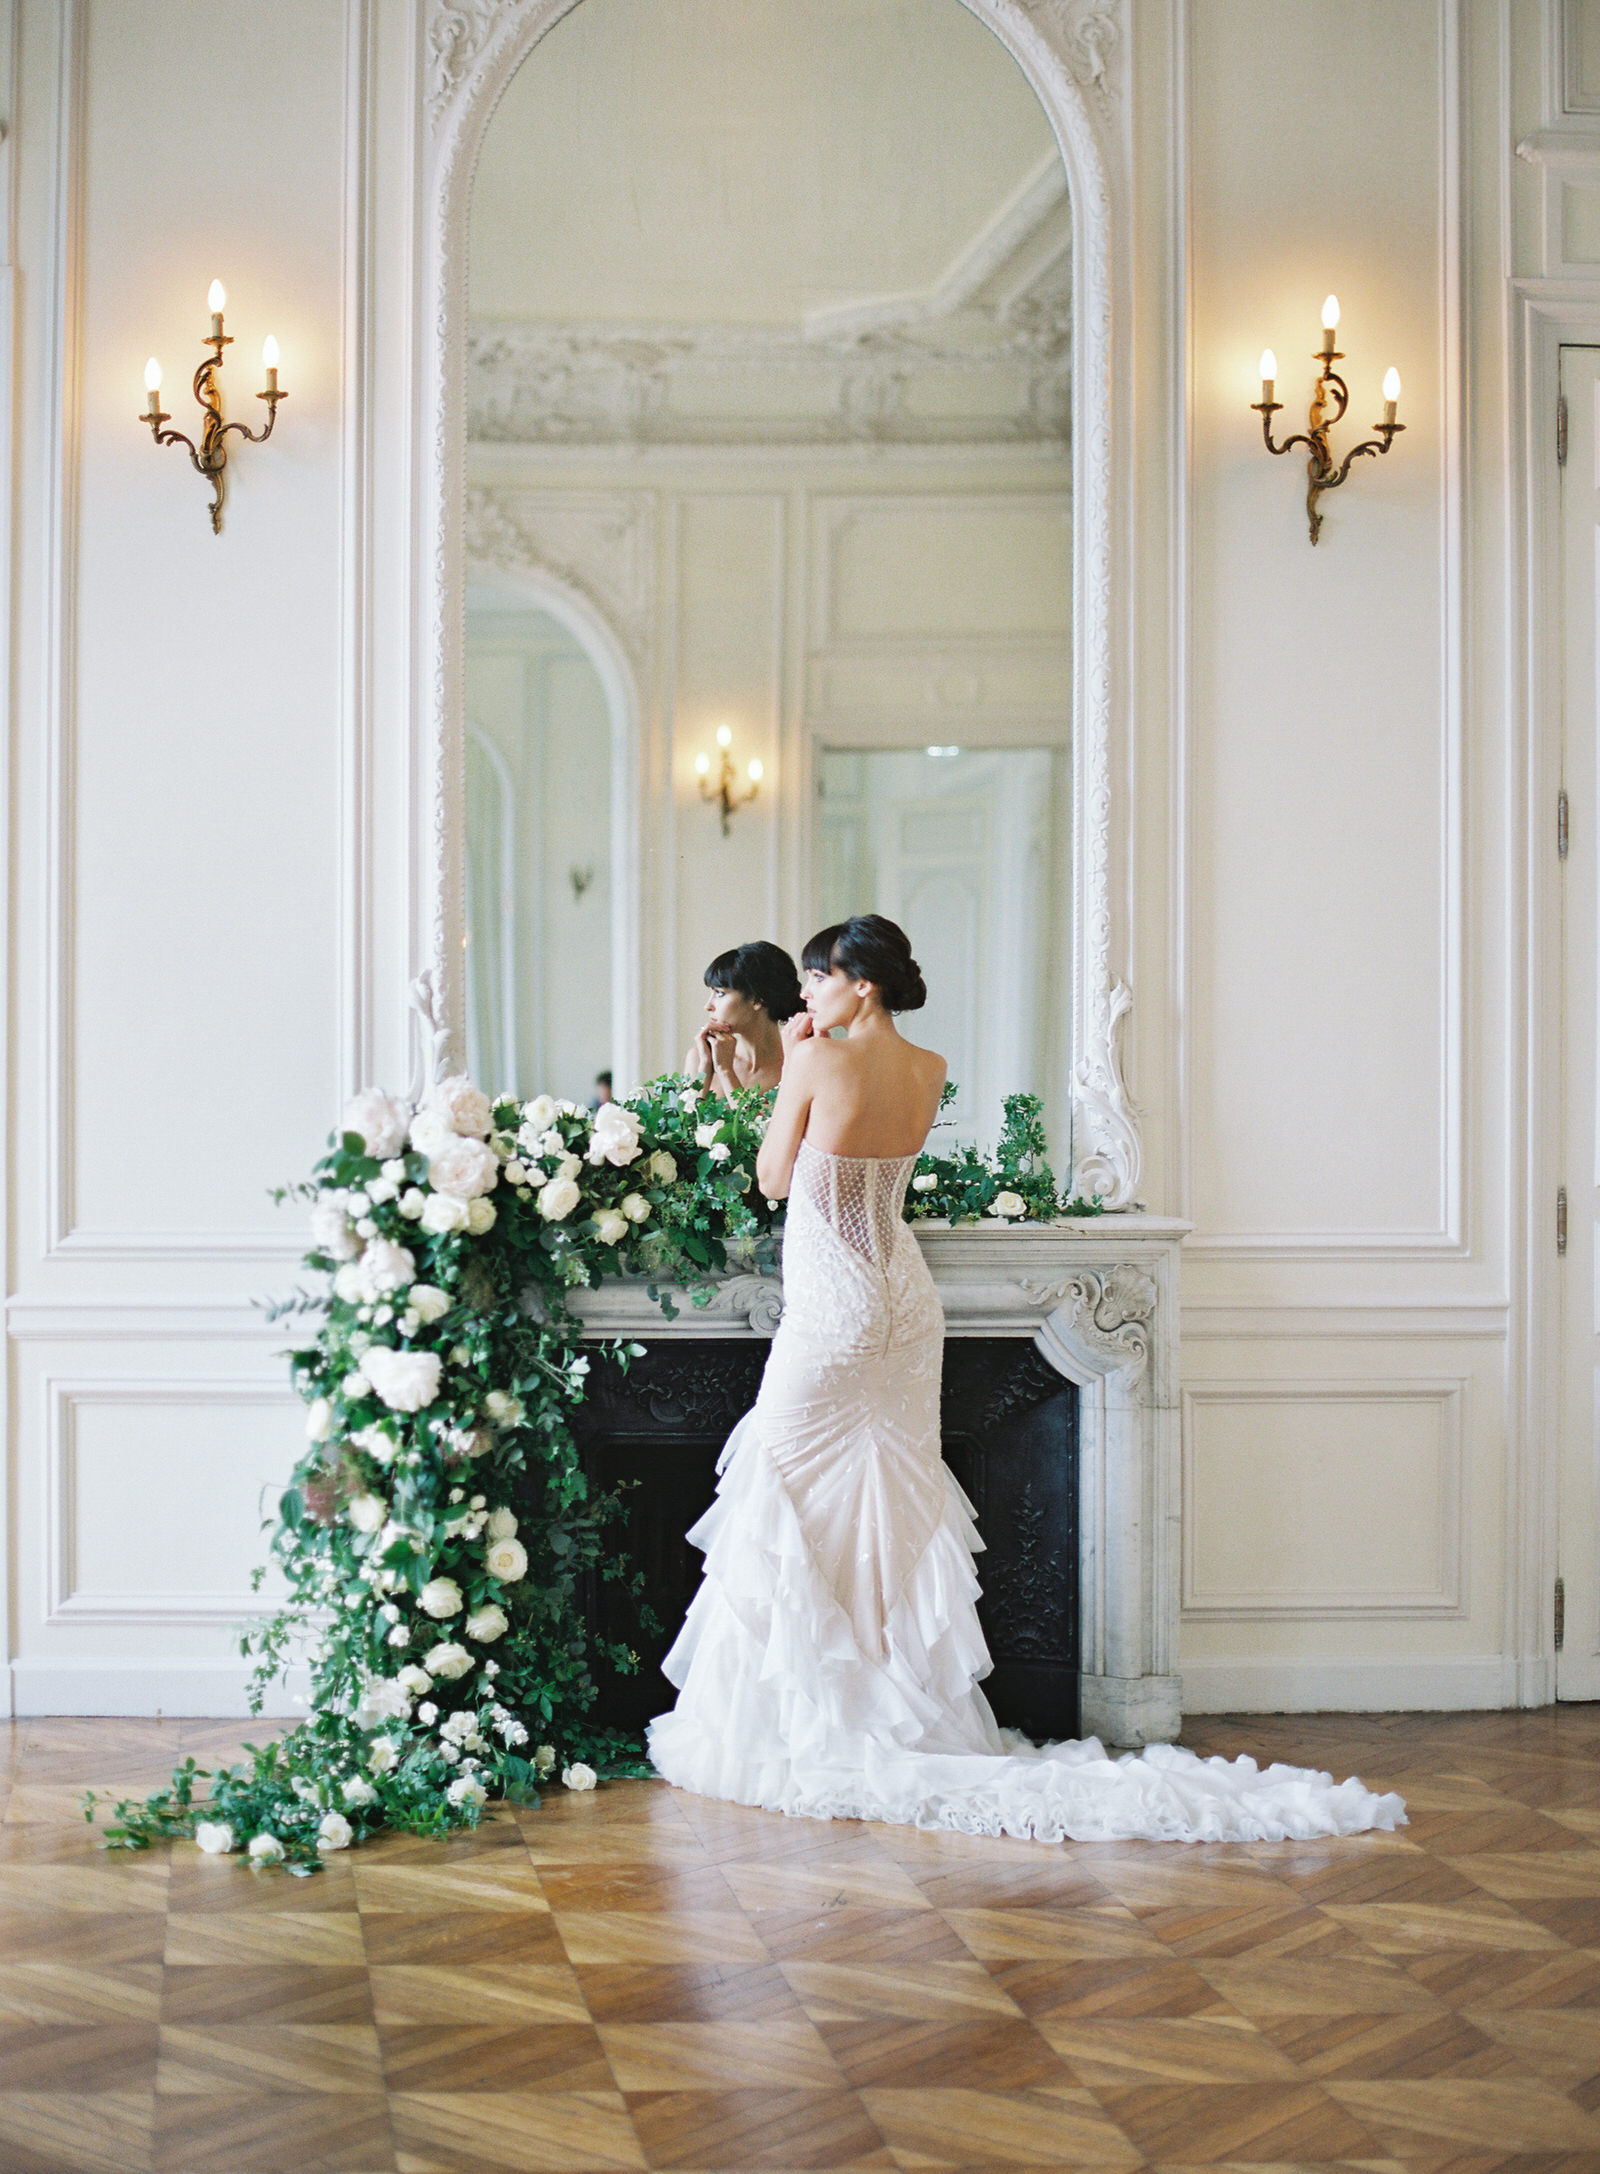 Paris floral mantel - designs by hemingway